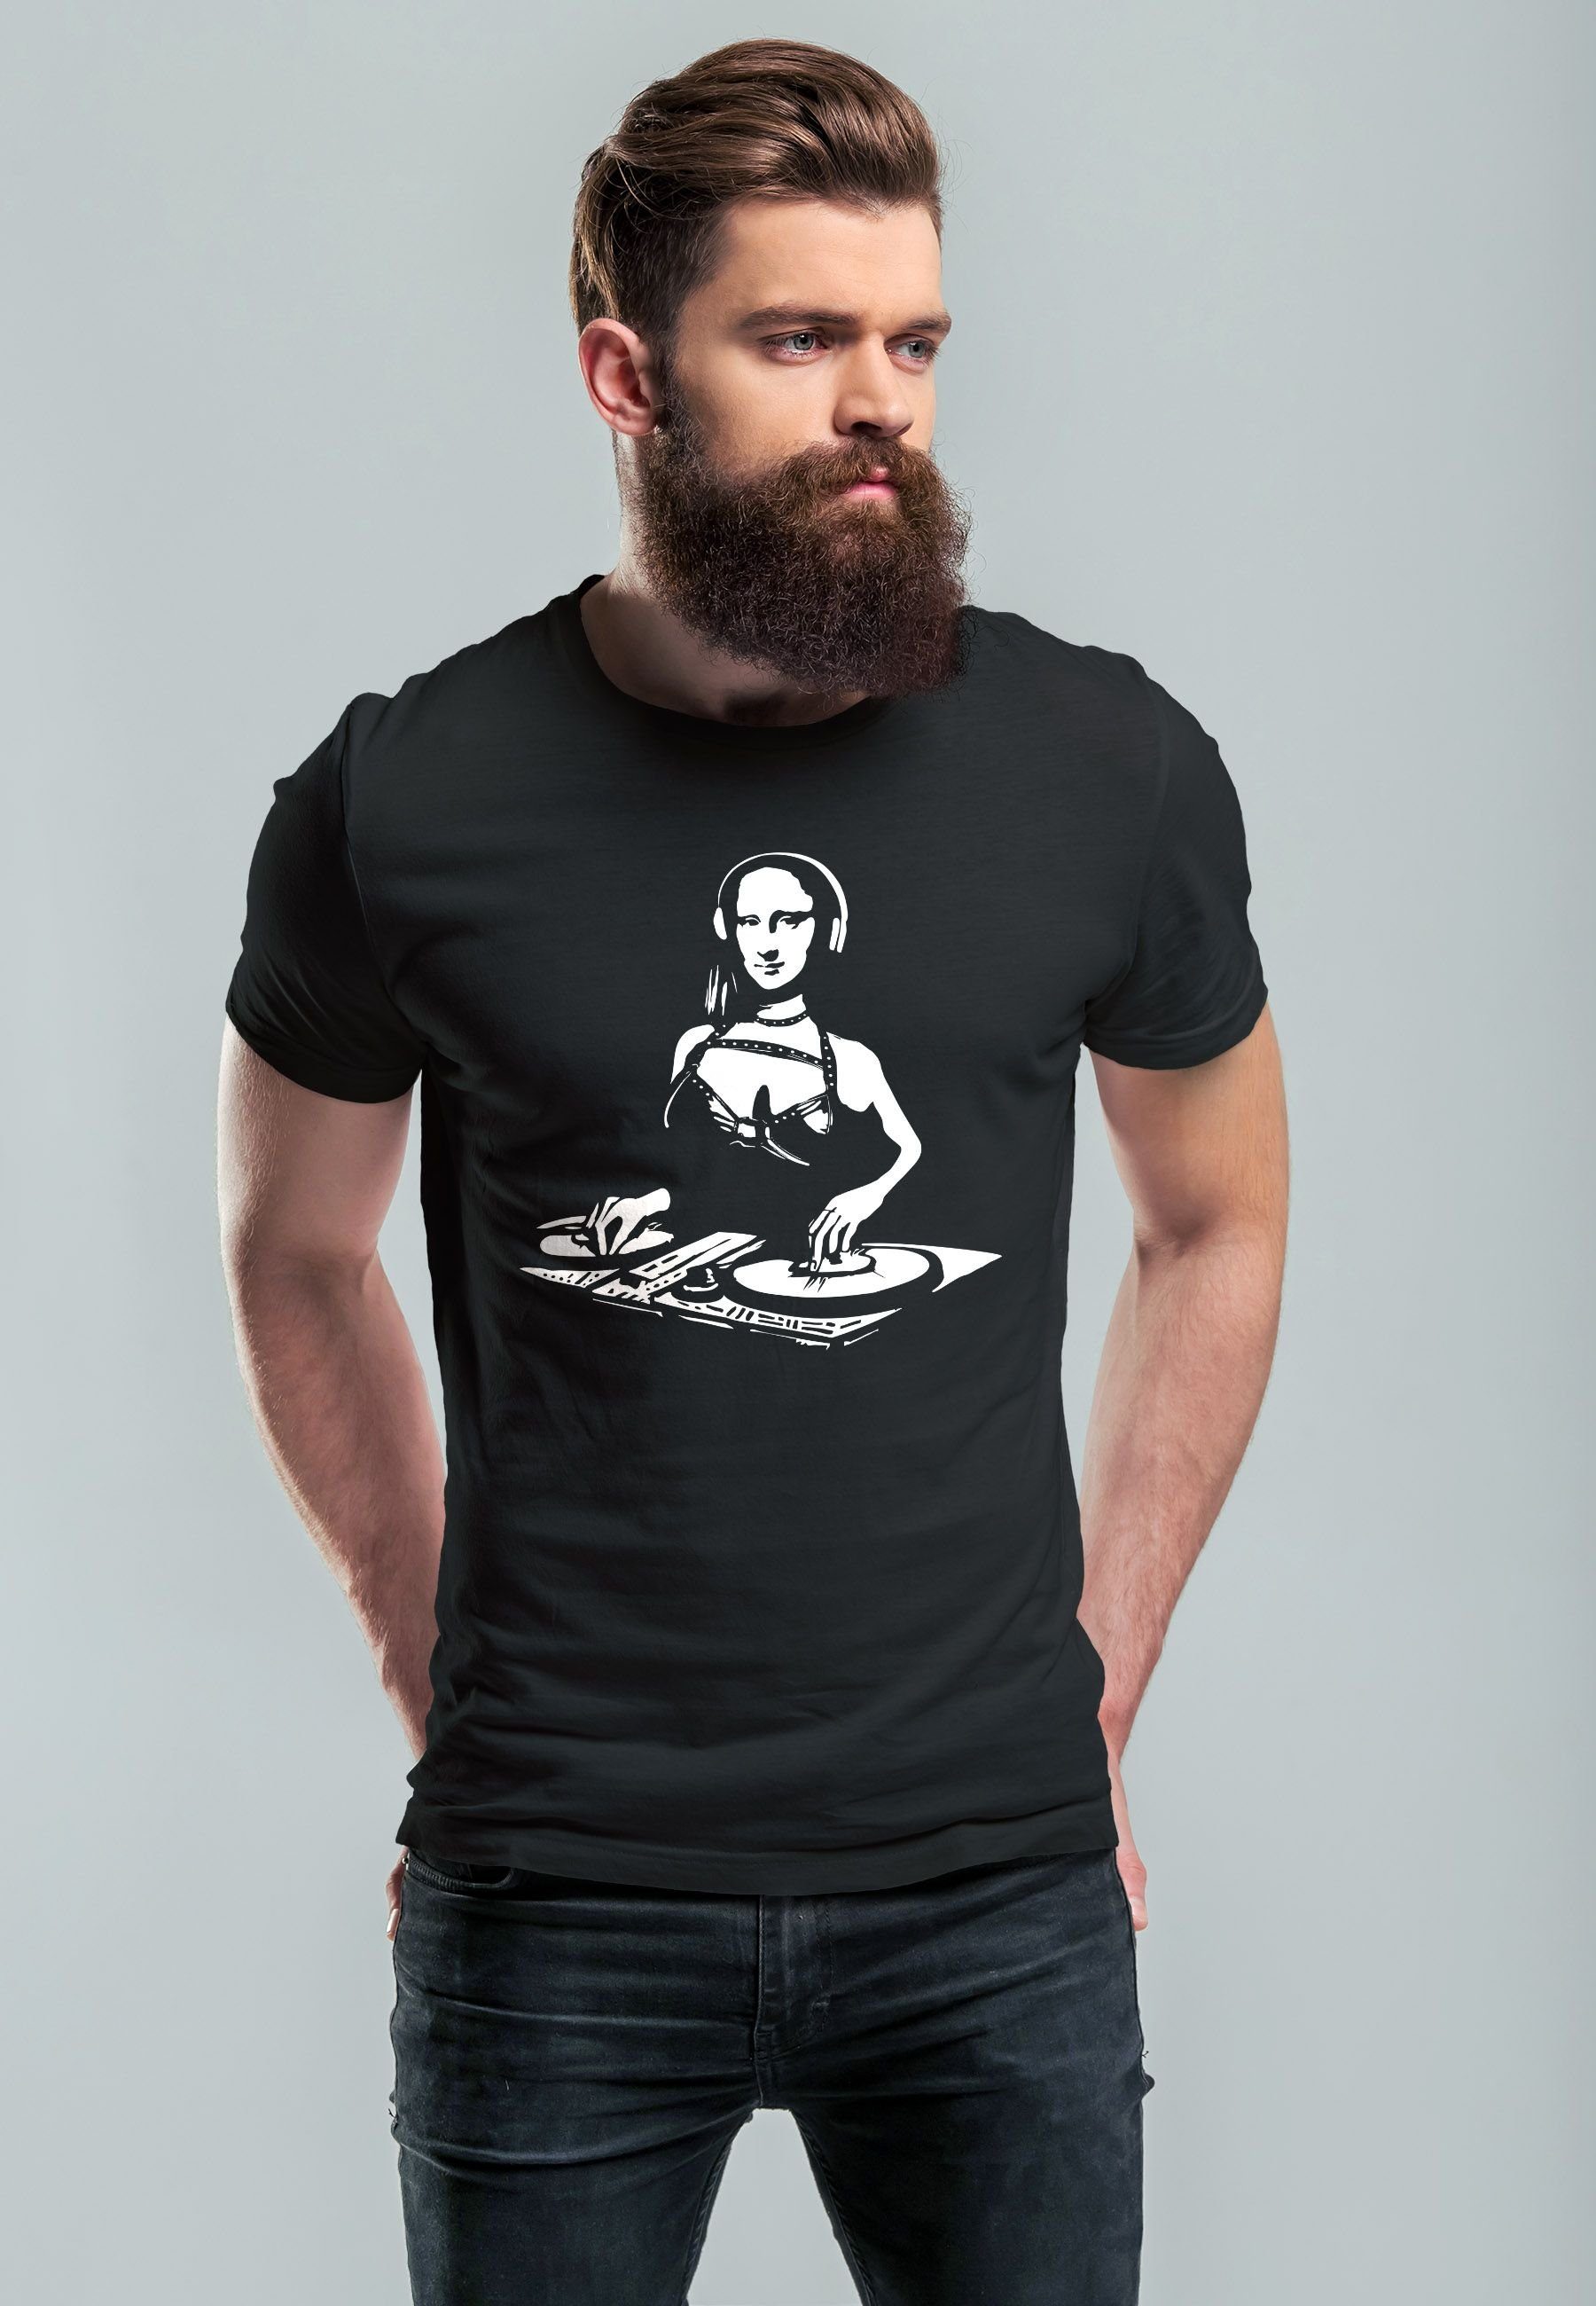 Print Electronic Festival Techno Herren Neverless Lisa schwarz Music mit Rave DJ T-Shirt Mona Fash Print-Shirt